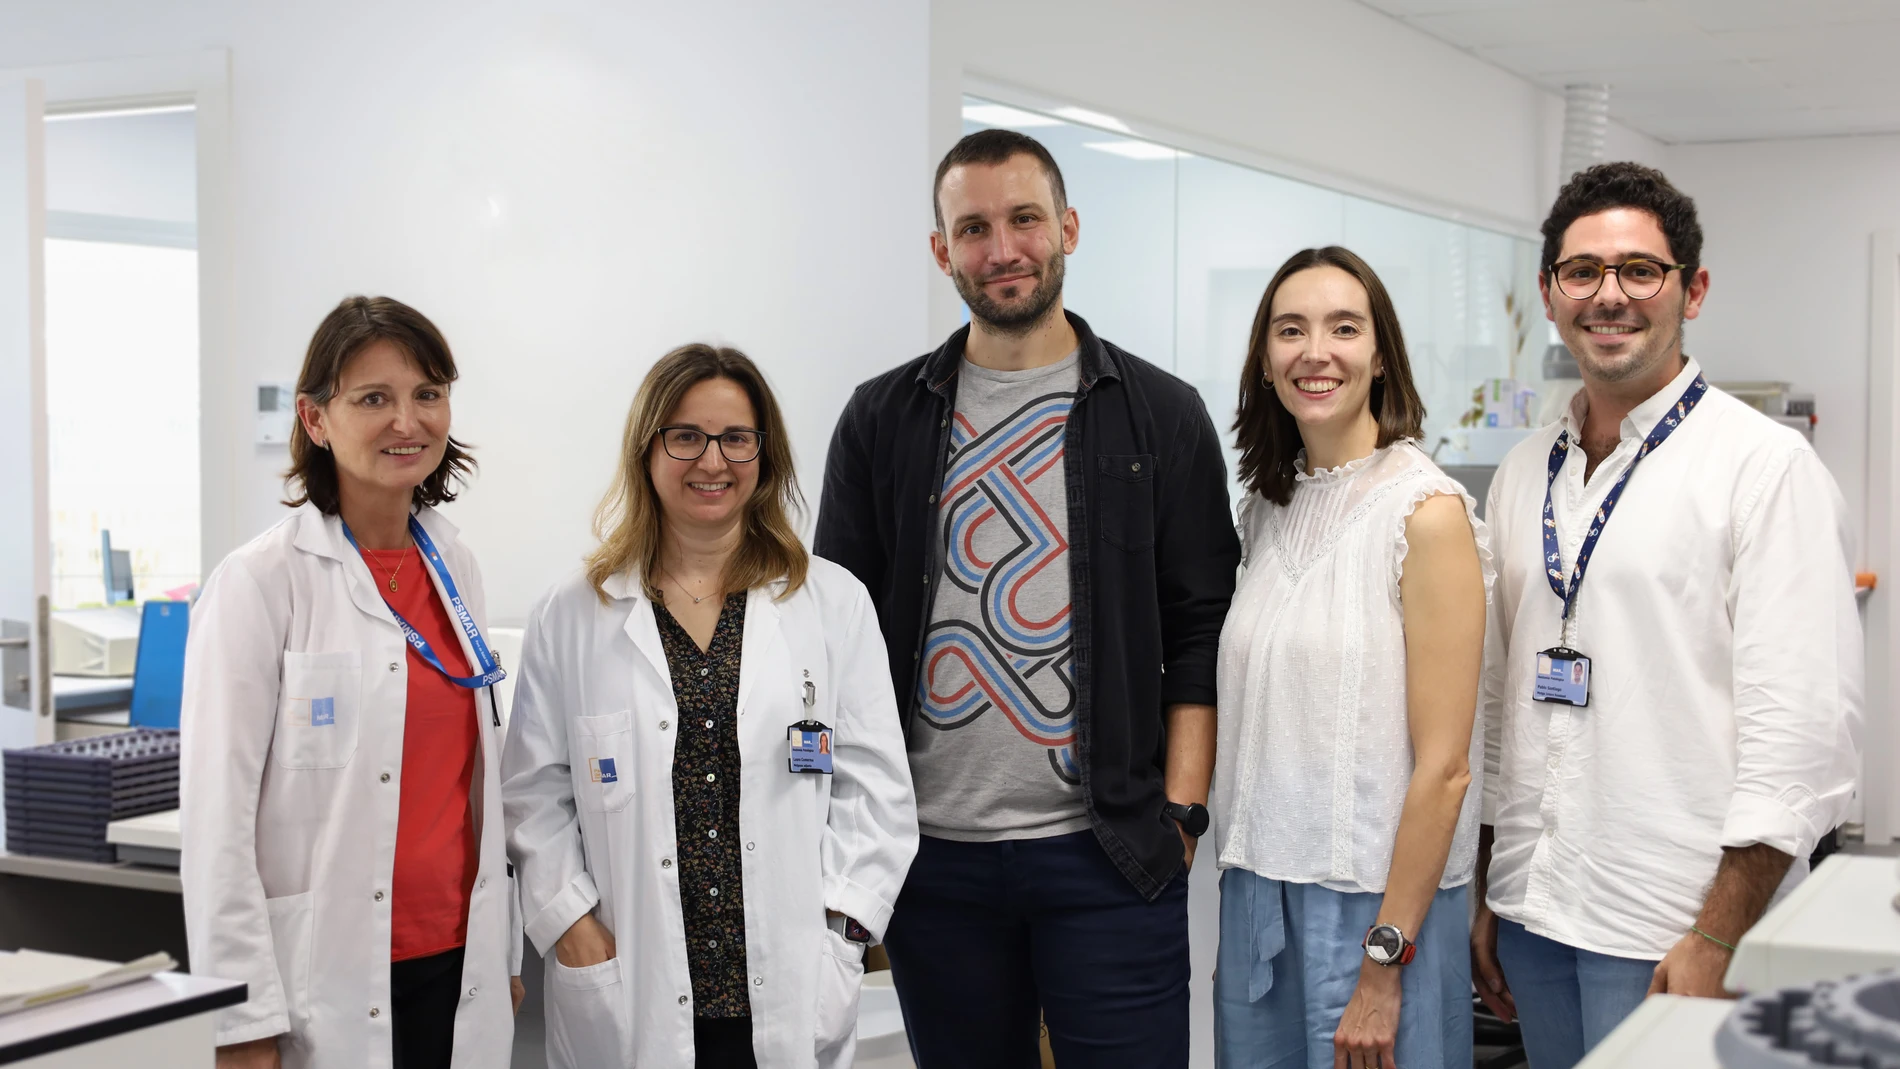 De izquierda a derecha: Dra. Mar Vernet, Dra. Laura Comerma, Joan Gibert, Dra. Mònica González-Farré y Dr. Pablo Santiago.